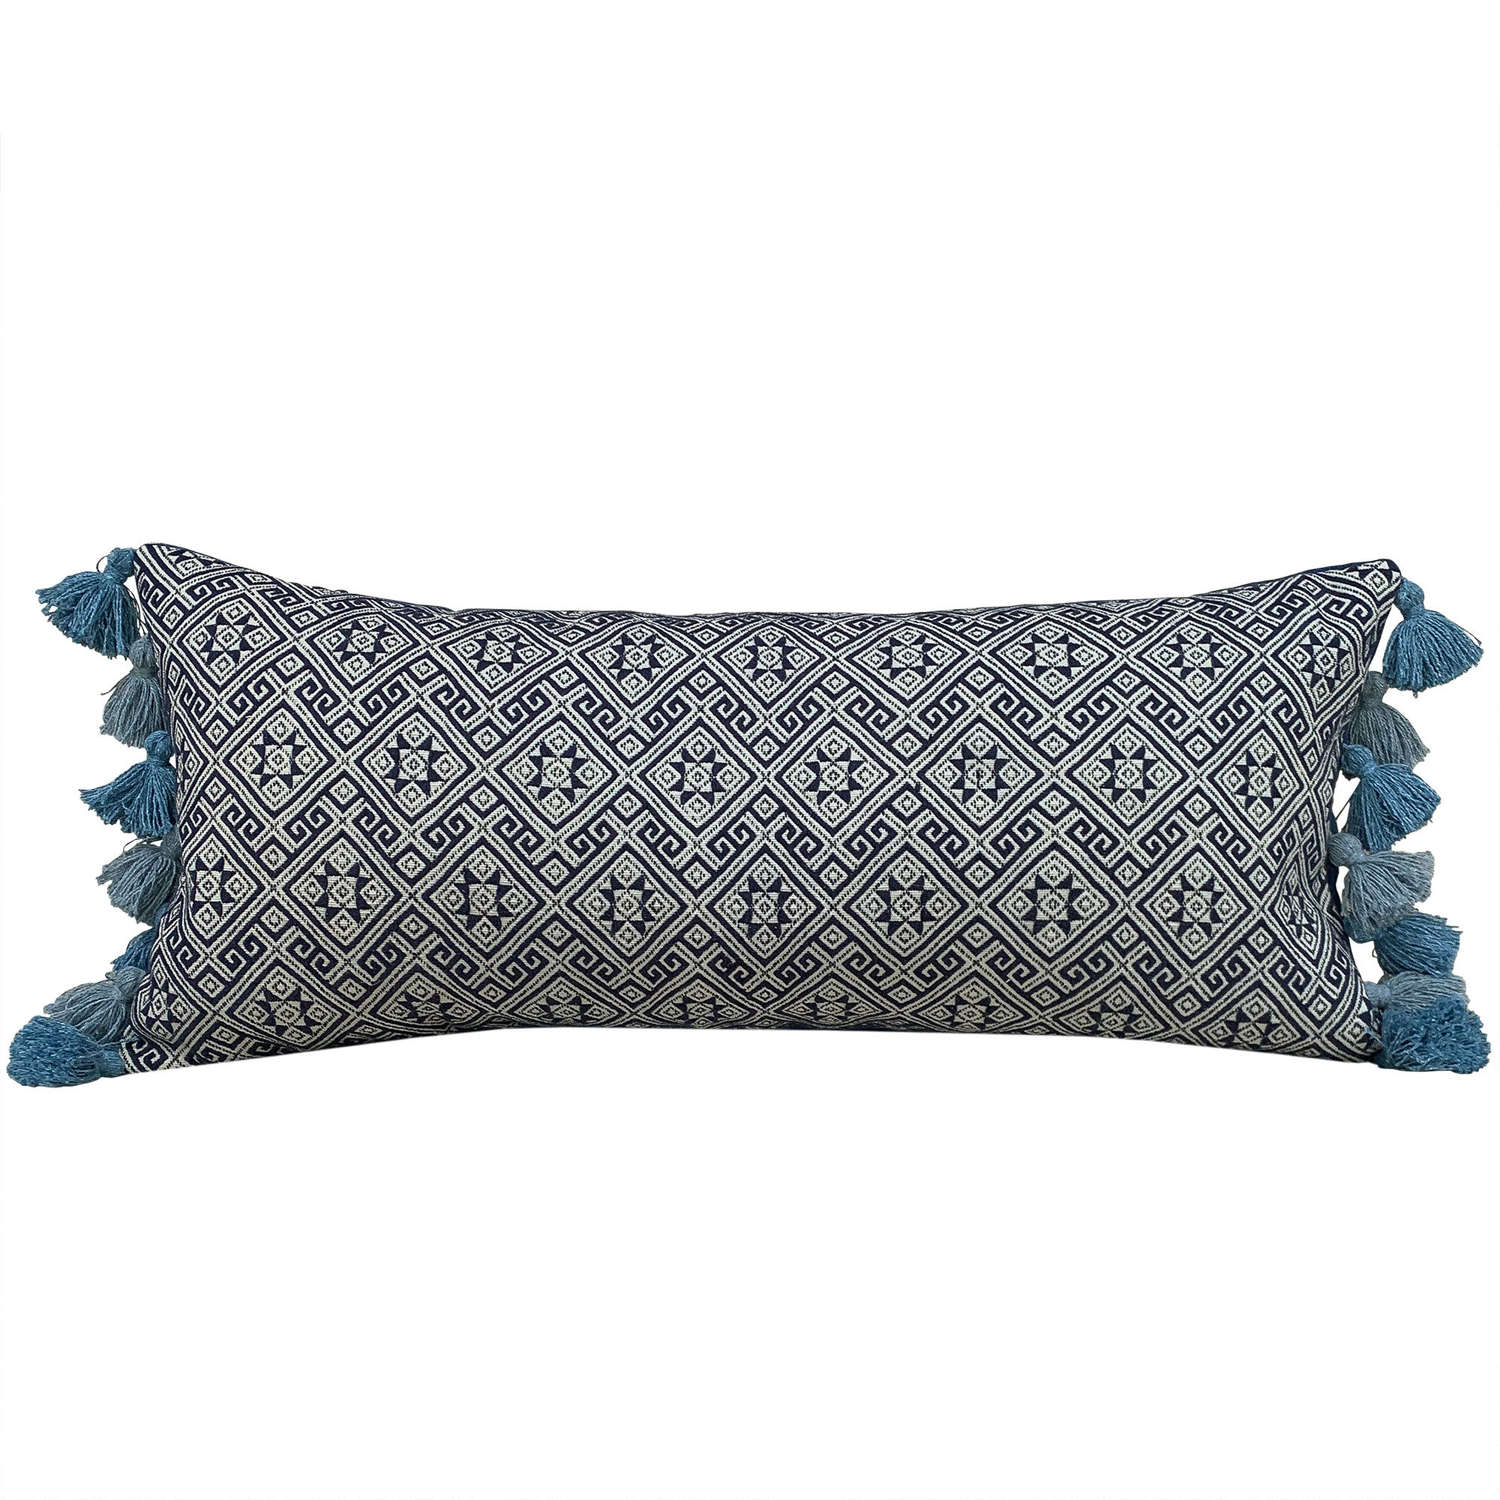 Indigo Zhuang cushions with tasselled sides